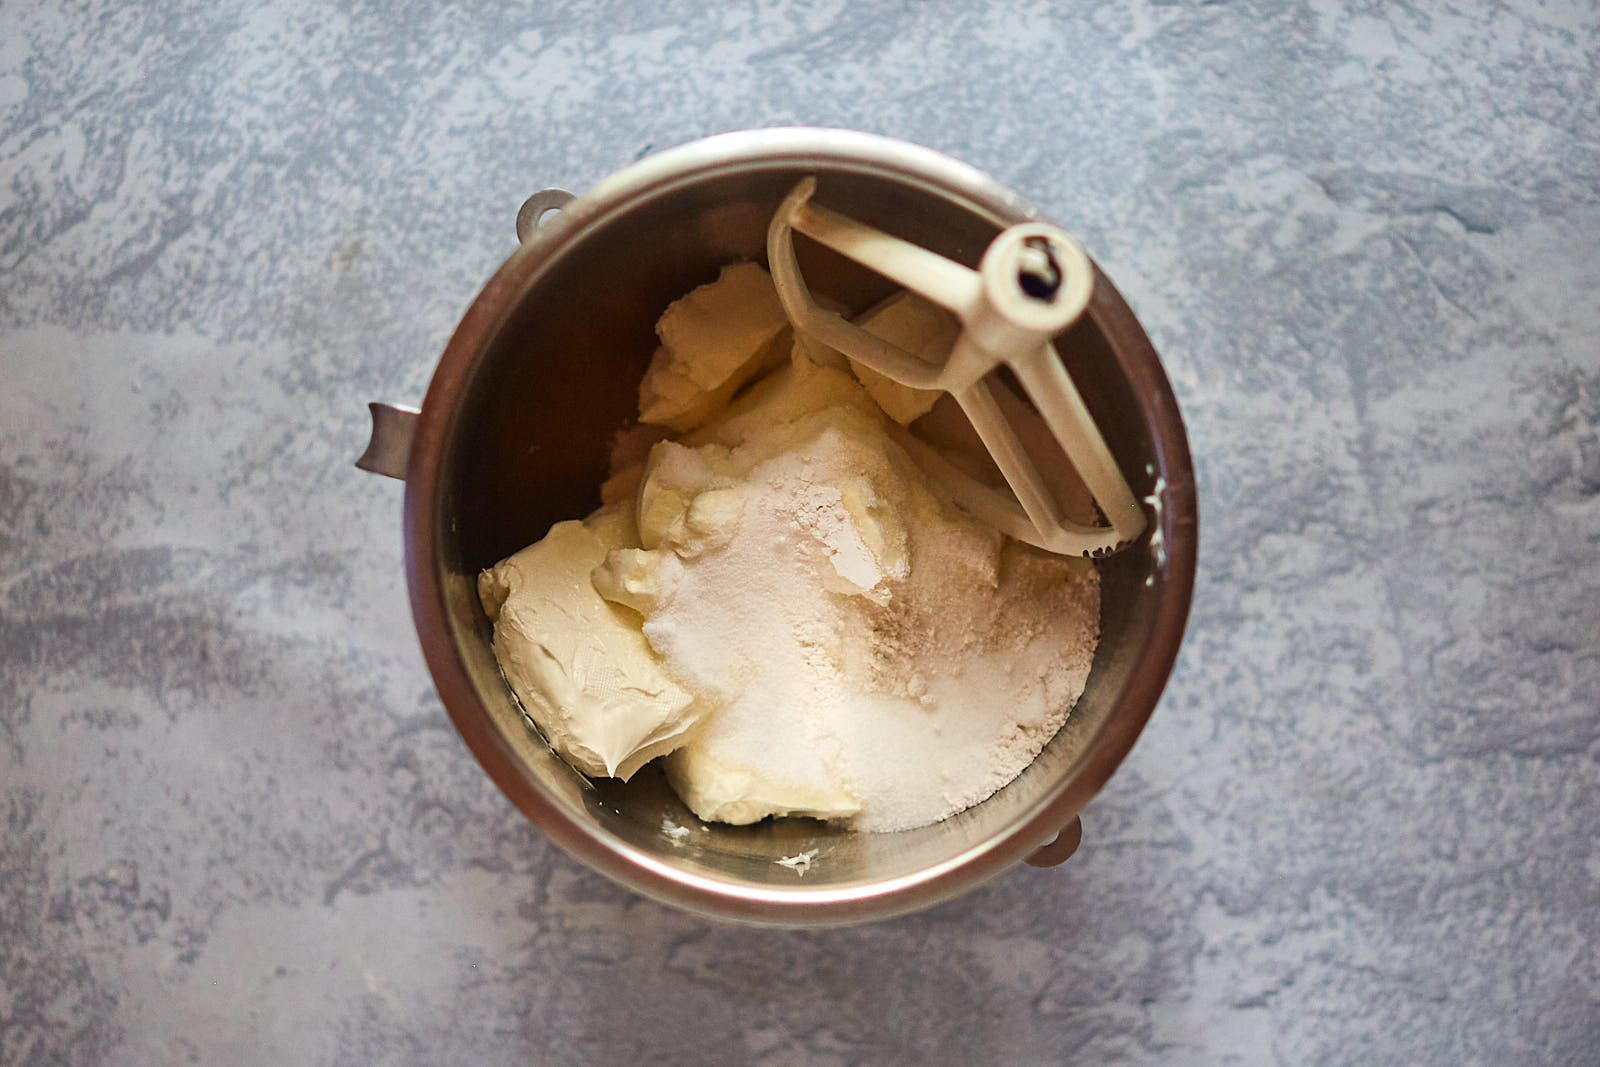 Sugar and cream cheese in a bowl to make Pistachio White Chocolate Cheesecake